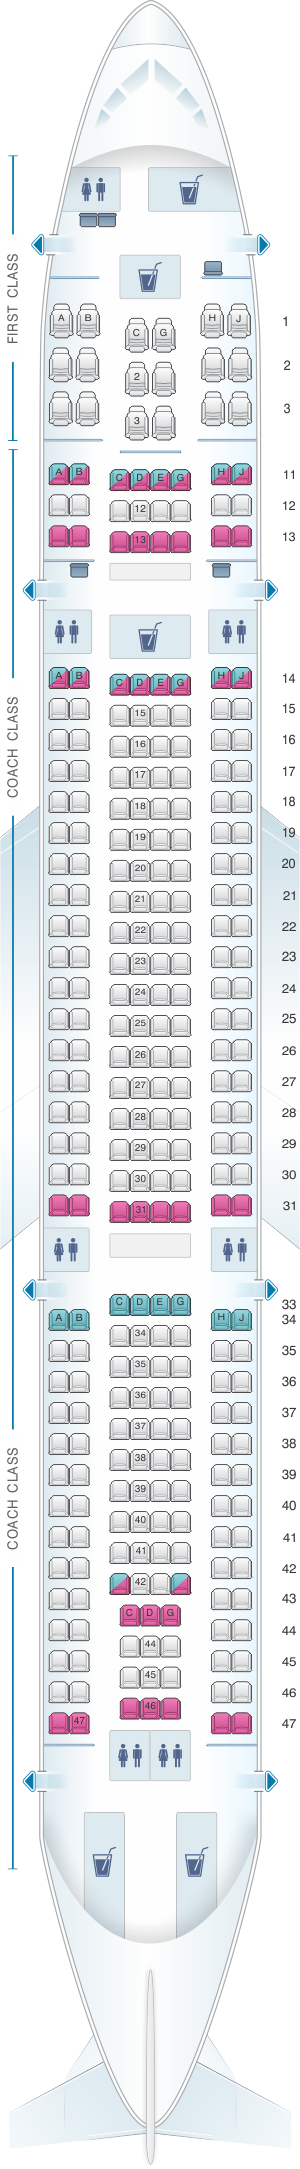 Hawaiian Airlines Airbus A330 Seating Chart